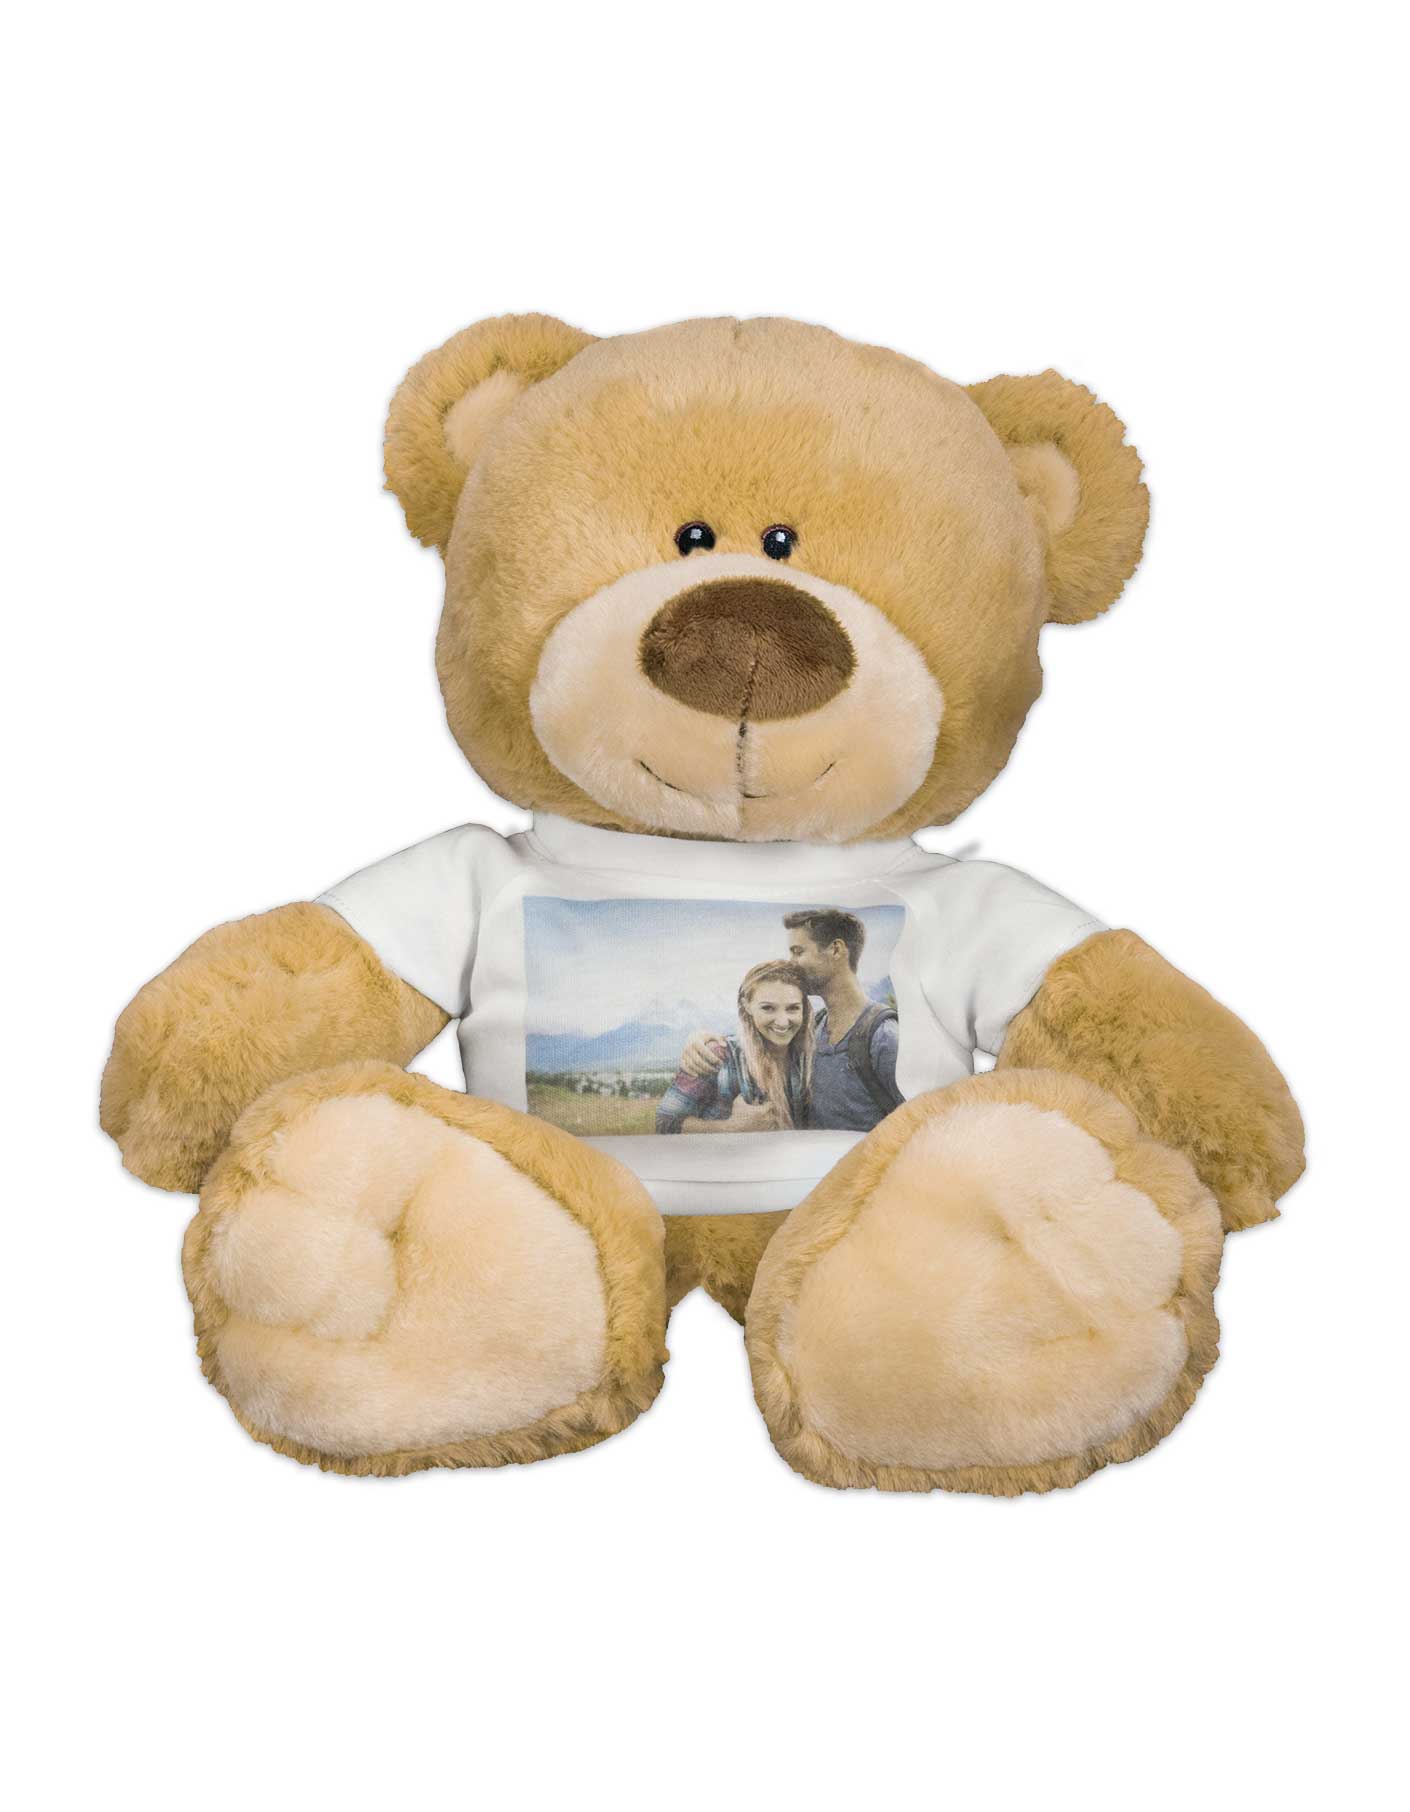 personalized teddy bear shirt